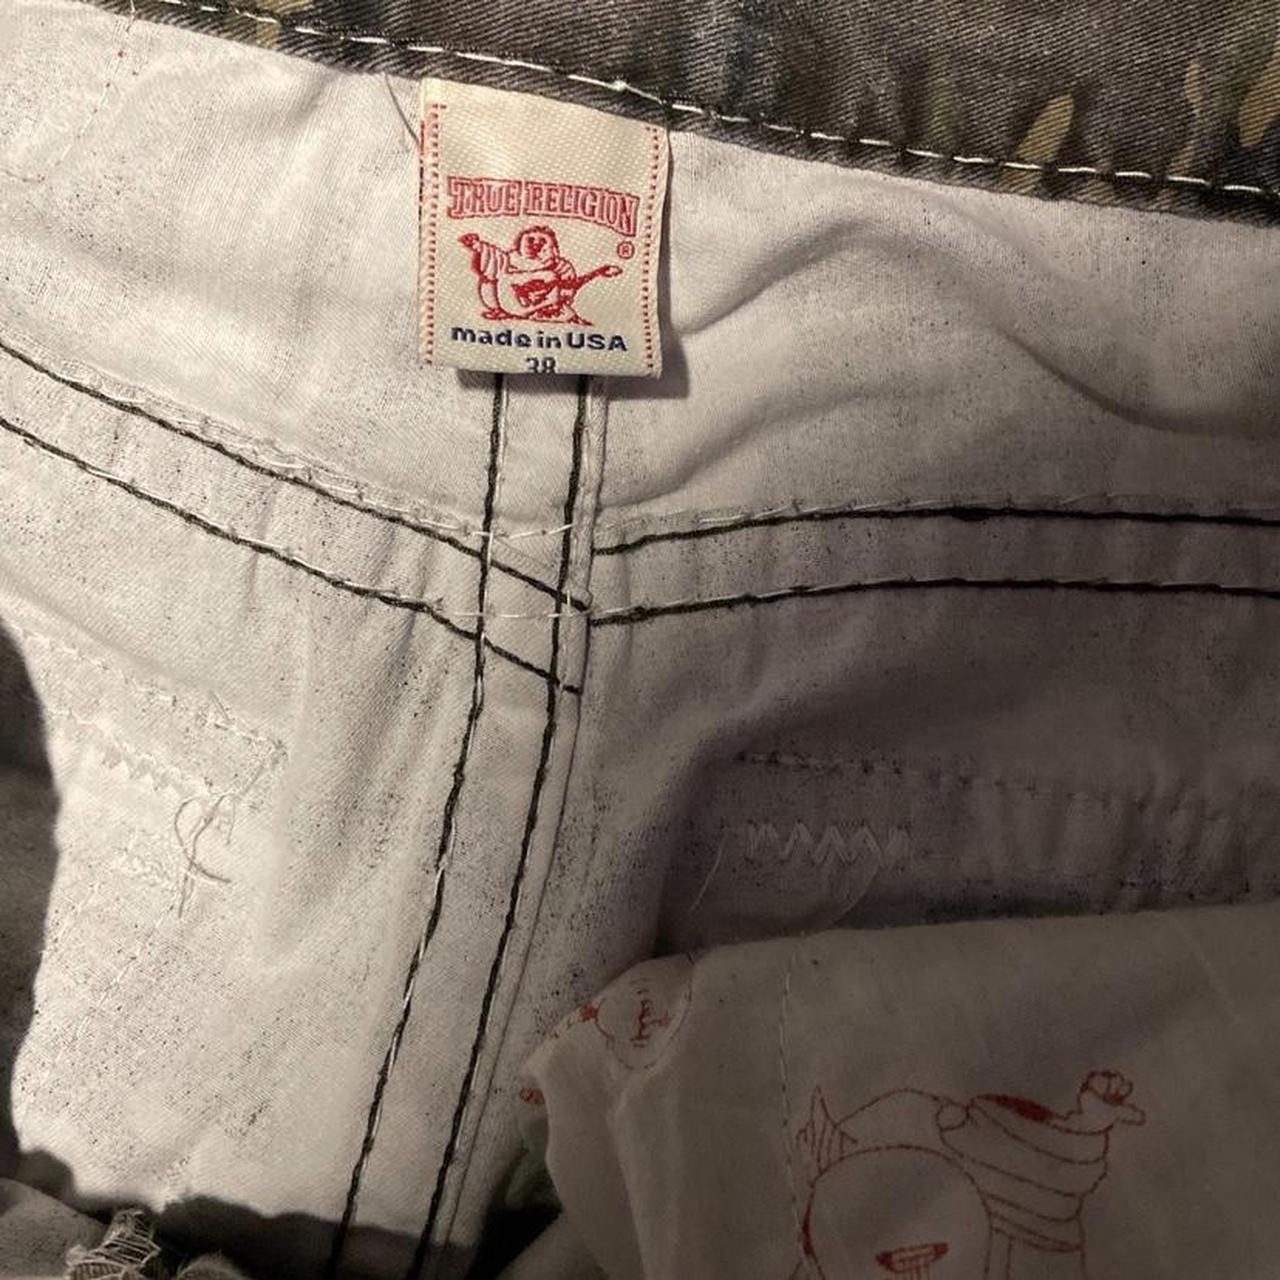 Camo True Religion jeans size 38x33 #semetary - Depop